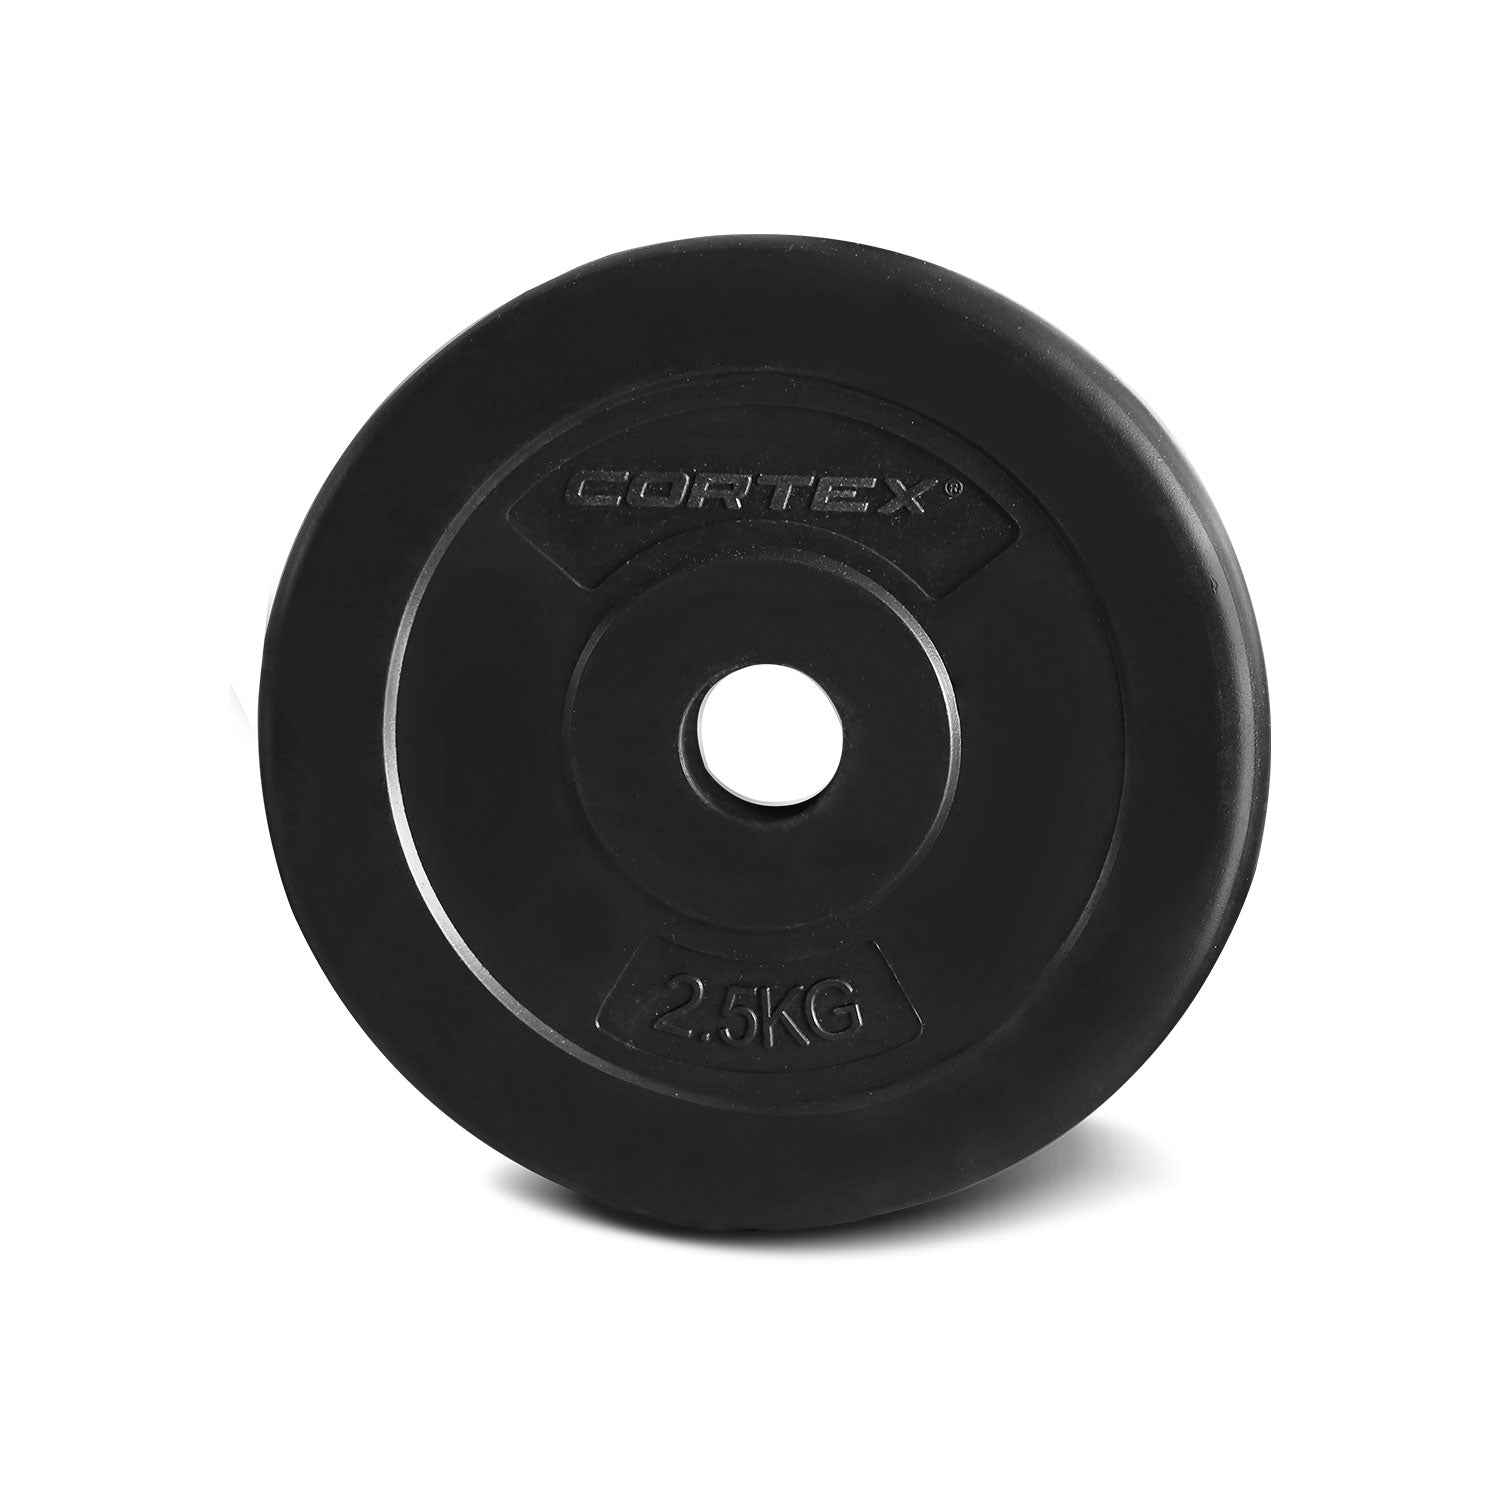 CORTEX 90kg EnduraCast Barbell Weight Set with Weight Tree